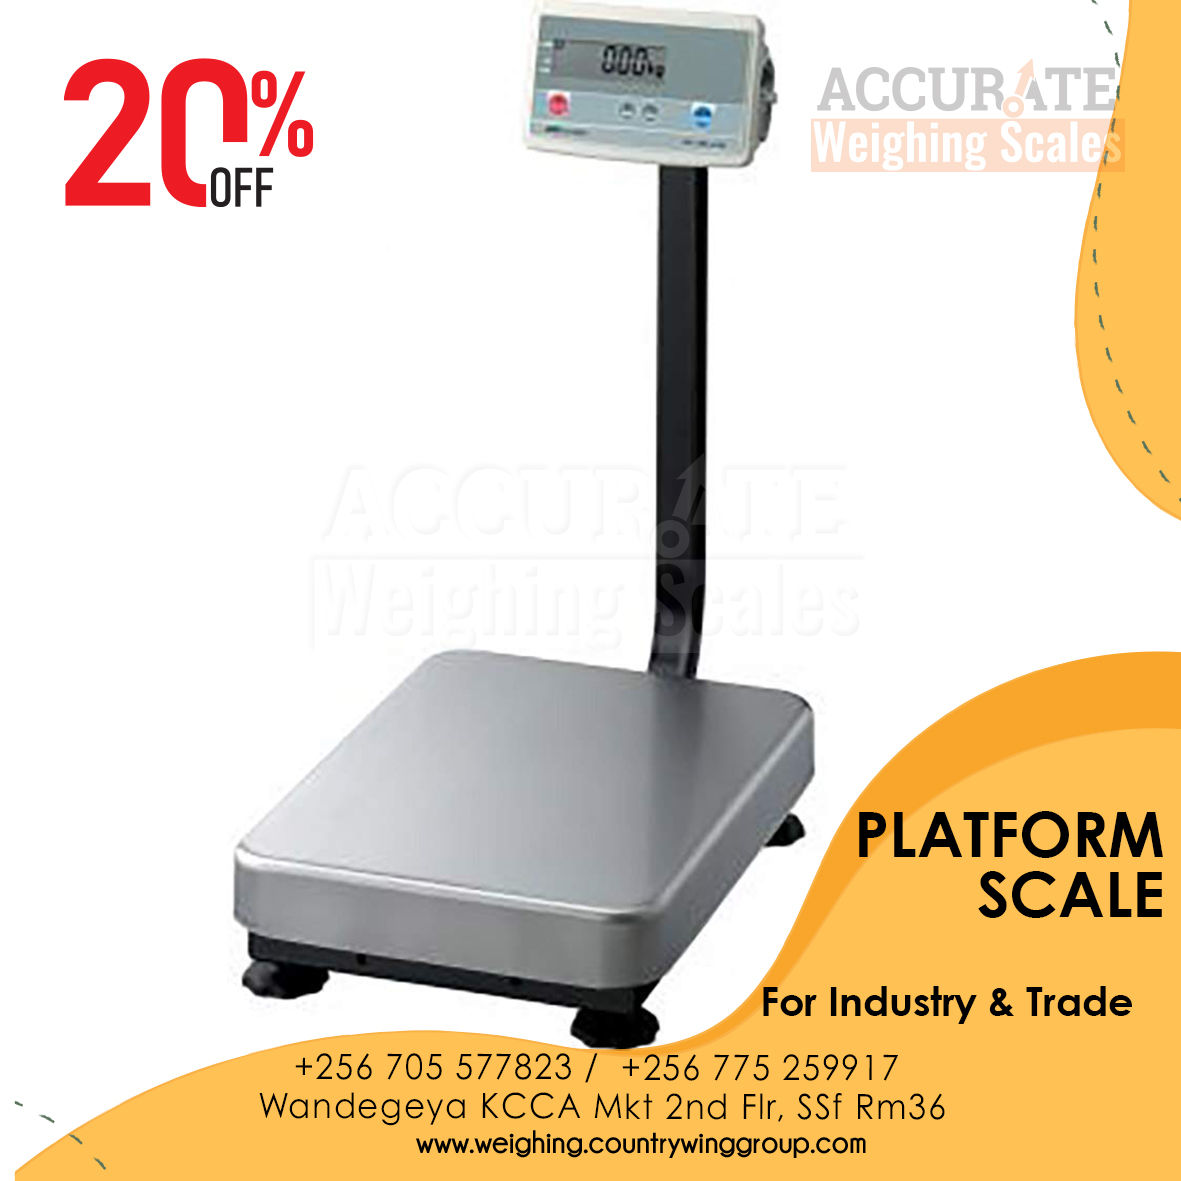 Platform scales warehouse scales for industrial weighing in Kampala Uganda, Kampala, Central, Uganda